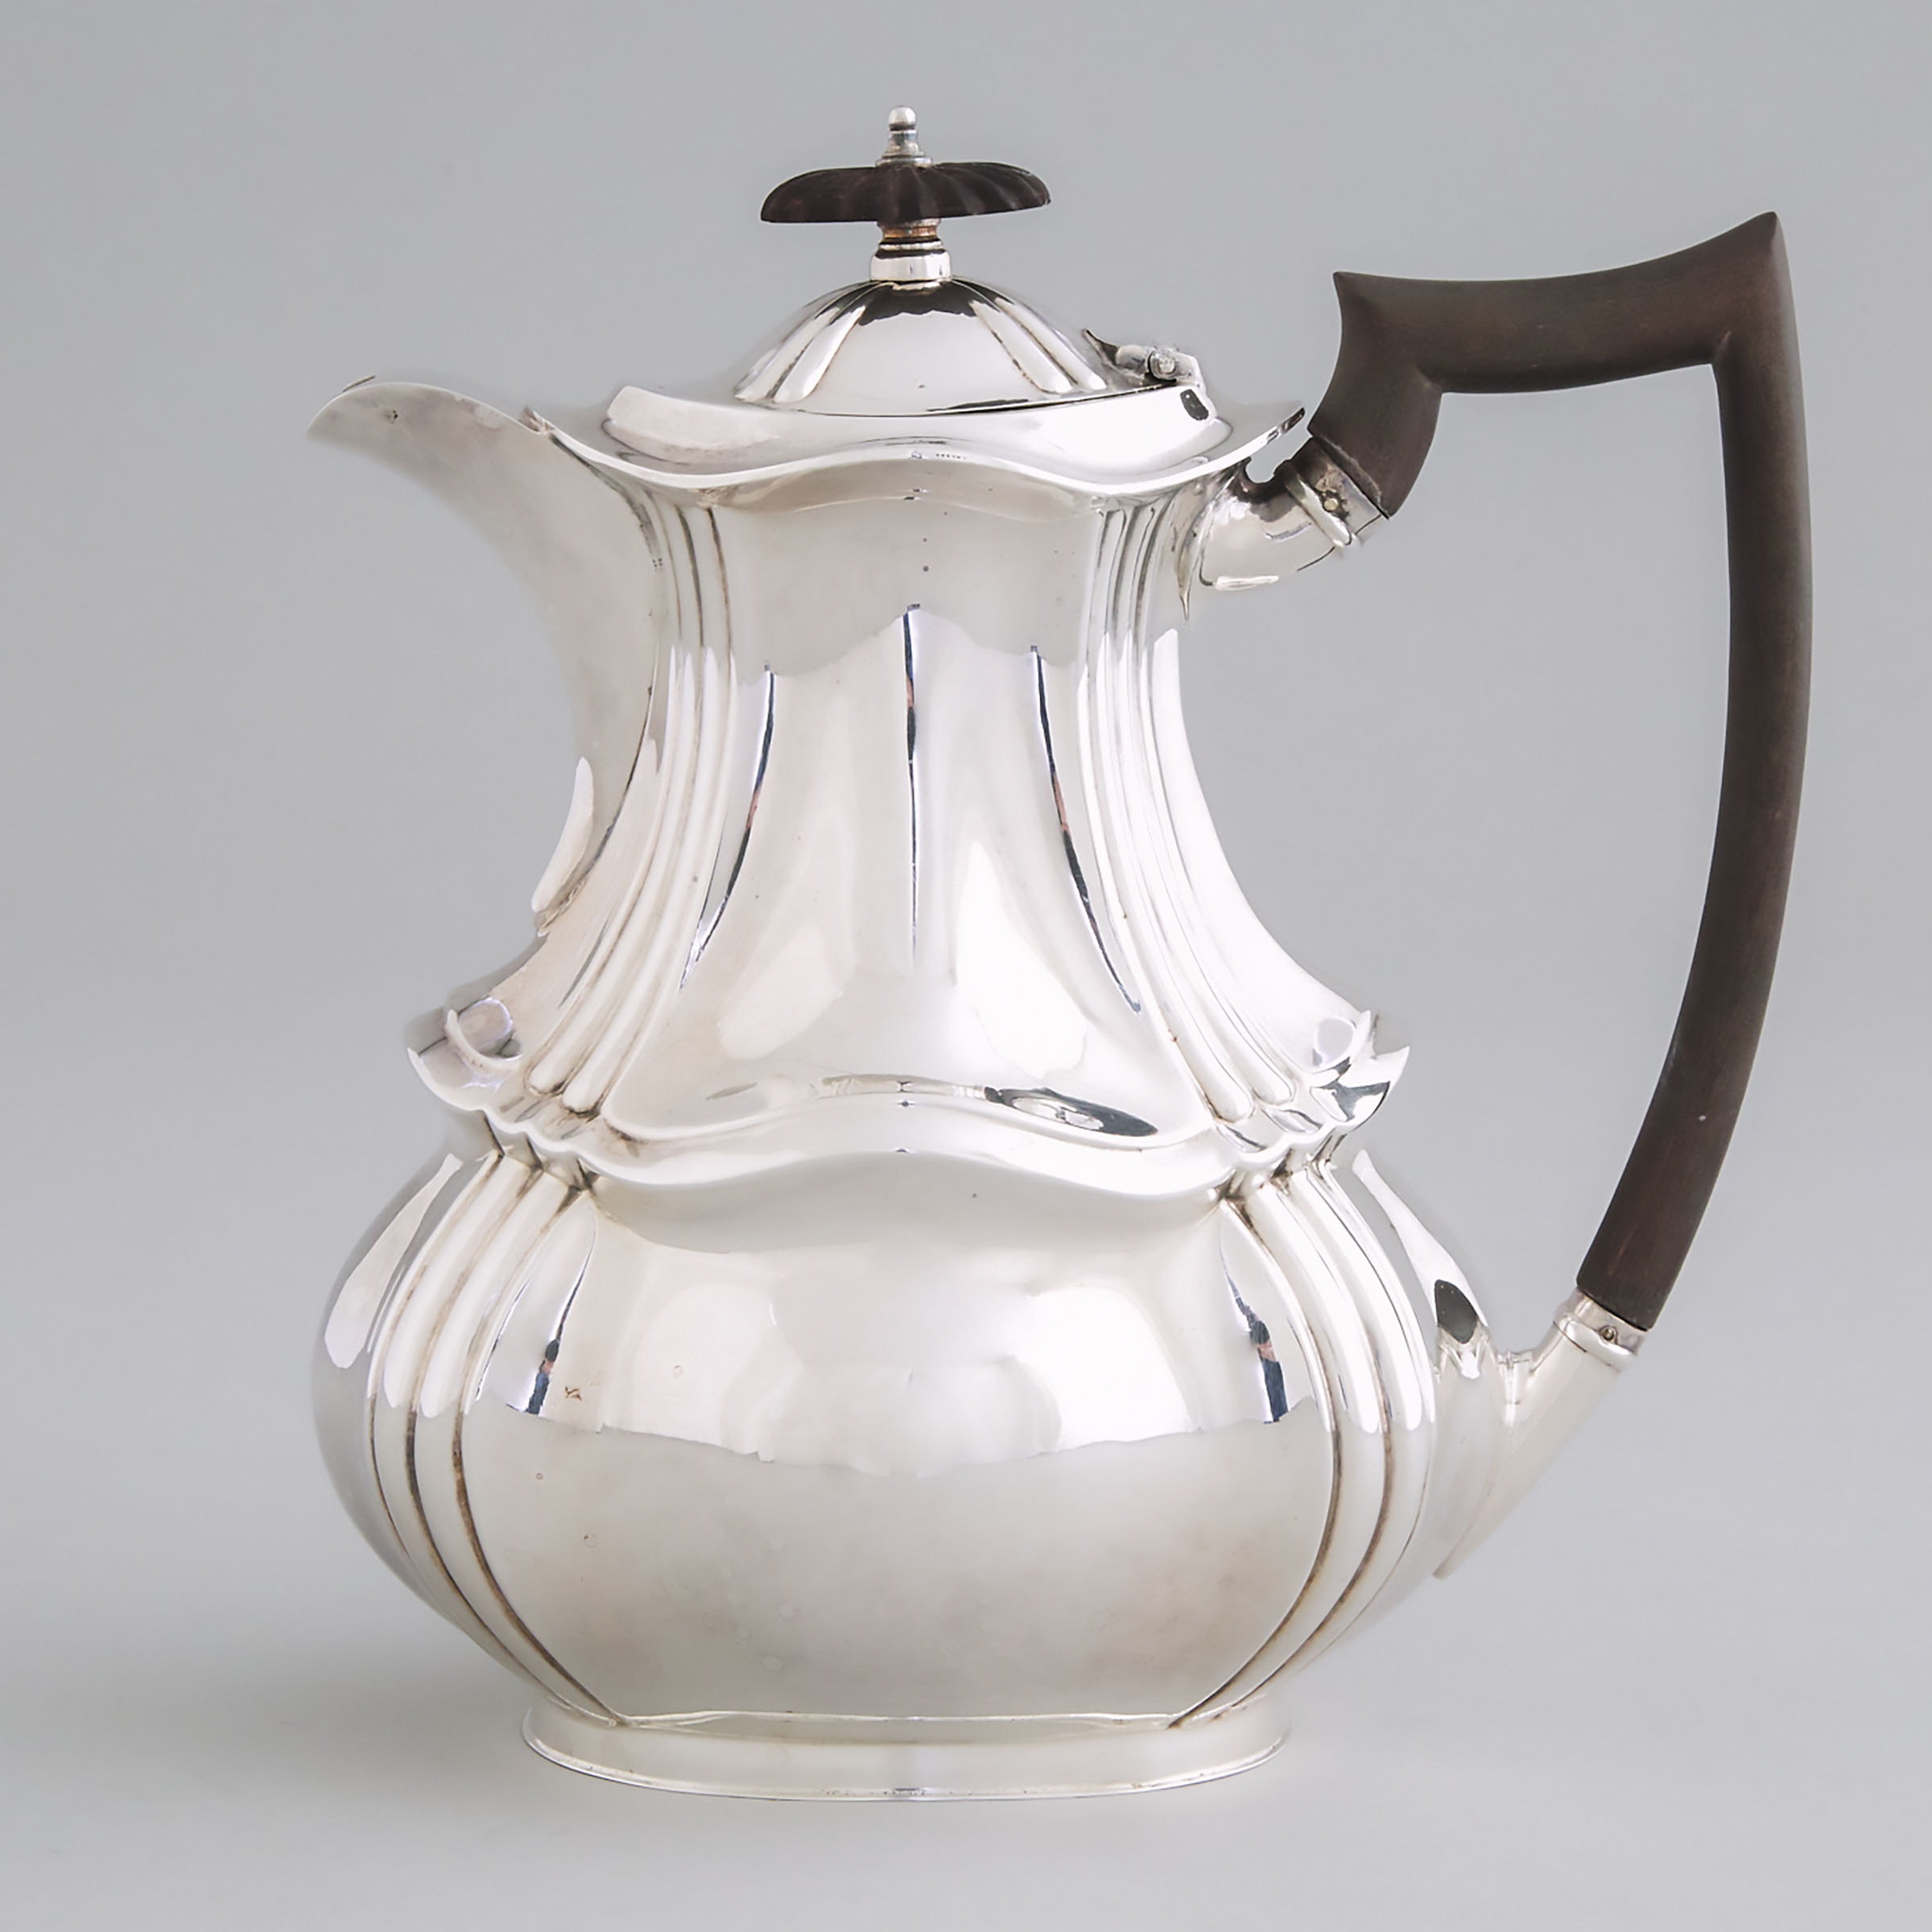 English Silver Hot Water Pot, Herbert Slater, Sheffield, 1922